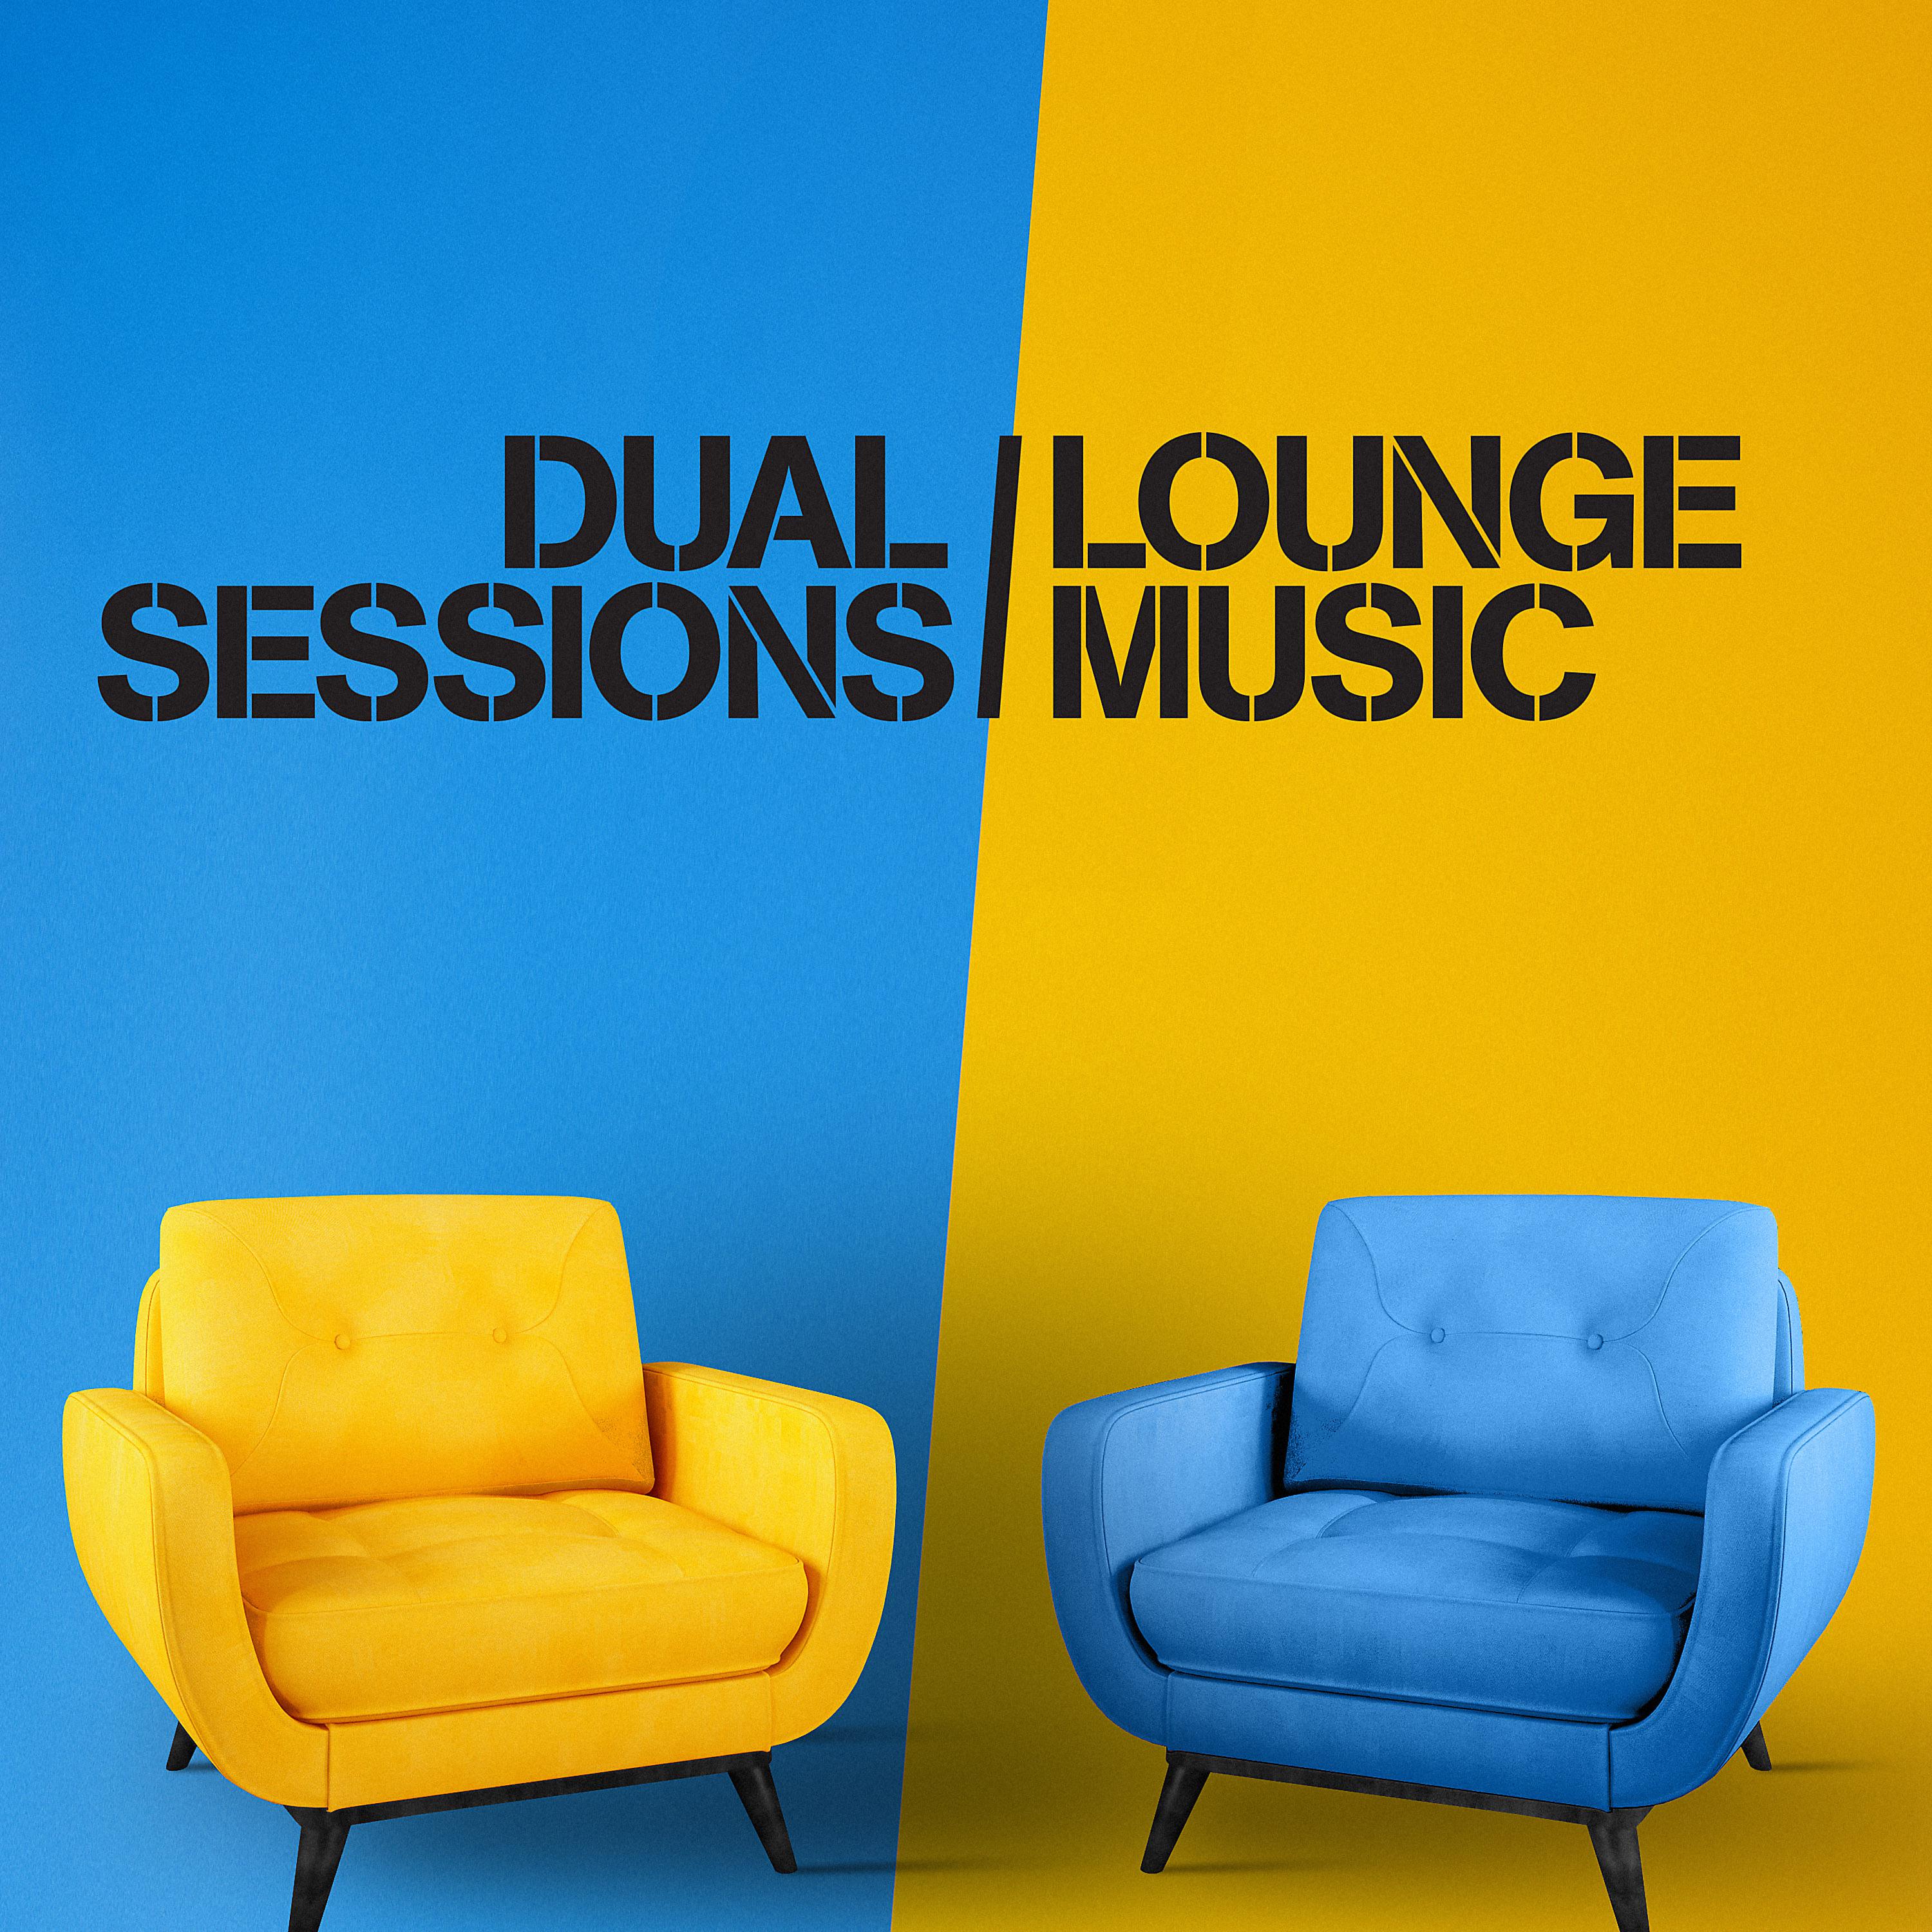 Постер альбома Lounge Music